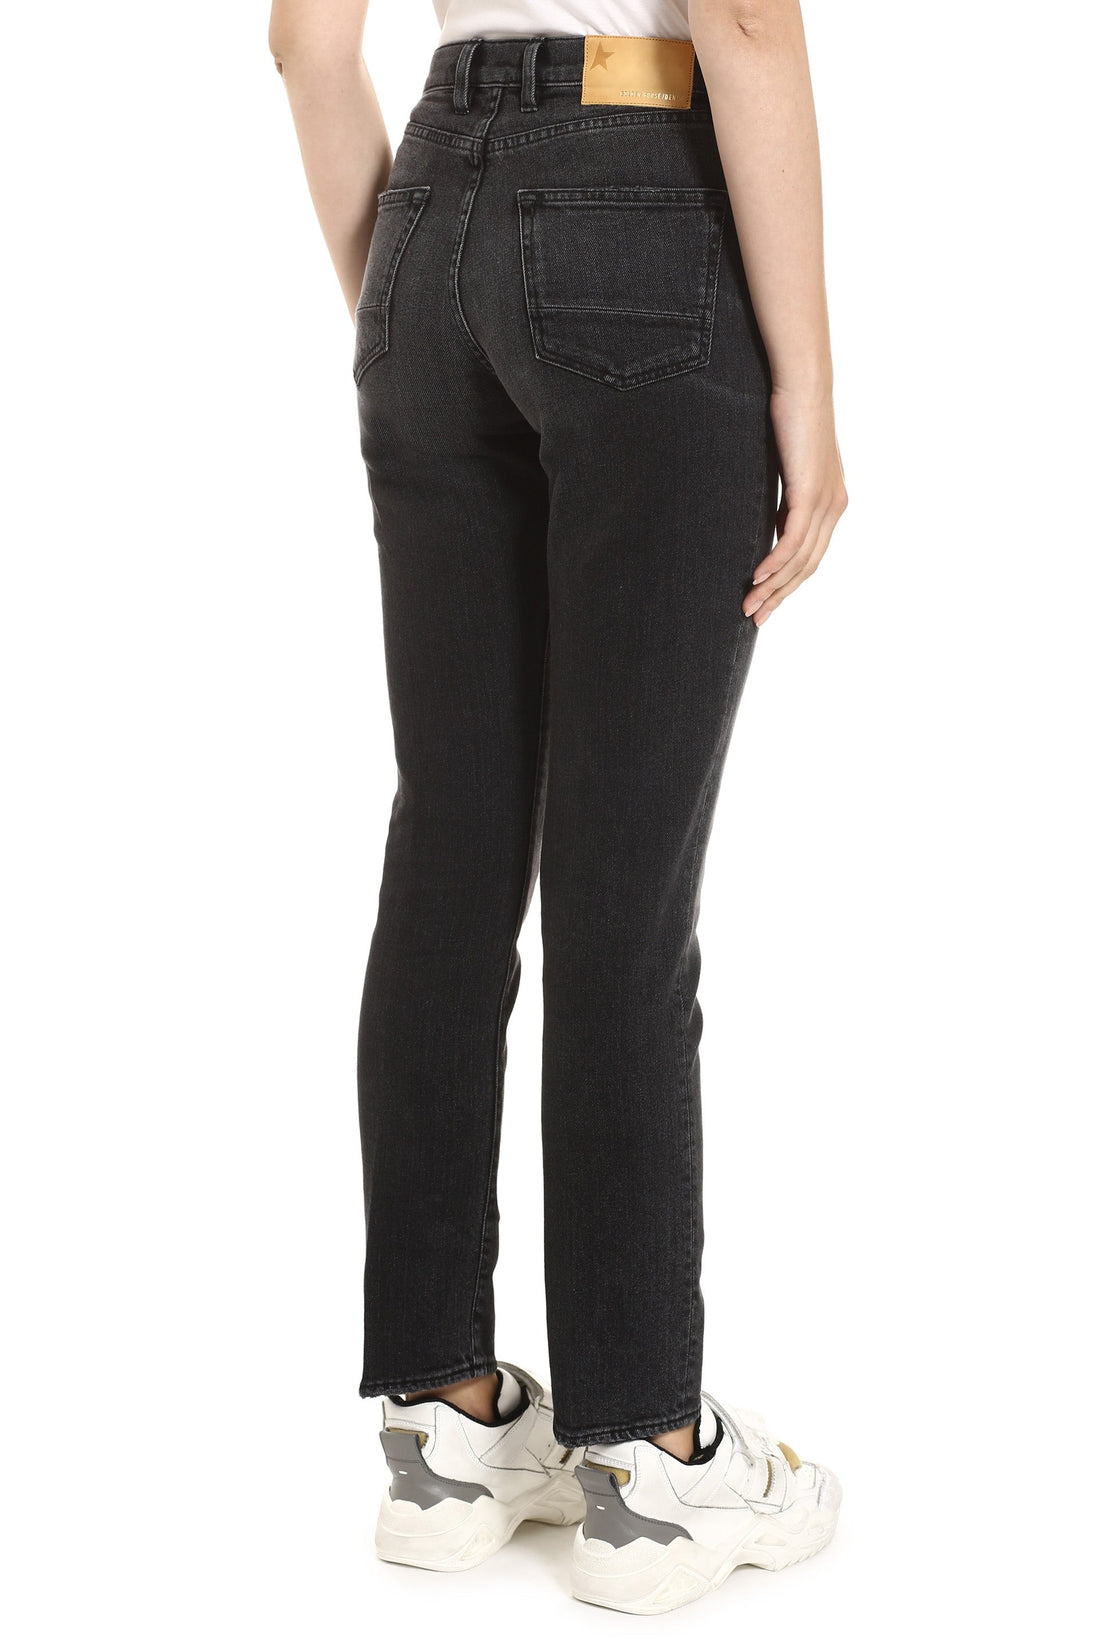 Golden Goose-OUTLET-SALE-Leggy 5-pocket jeans-ARCHIVIST